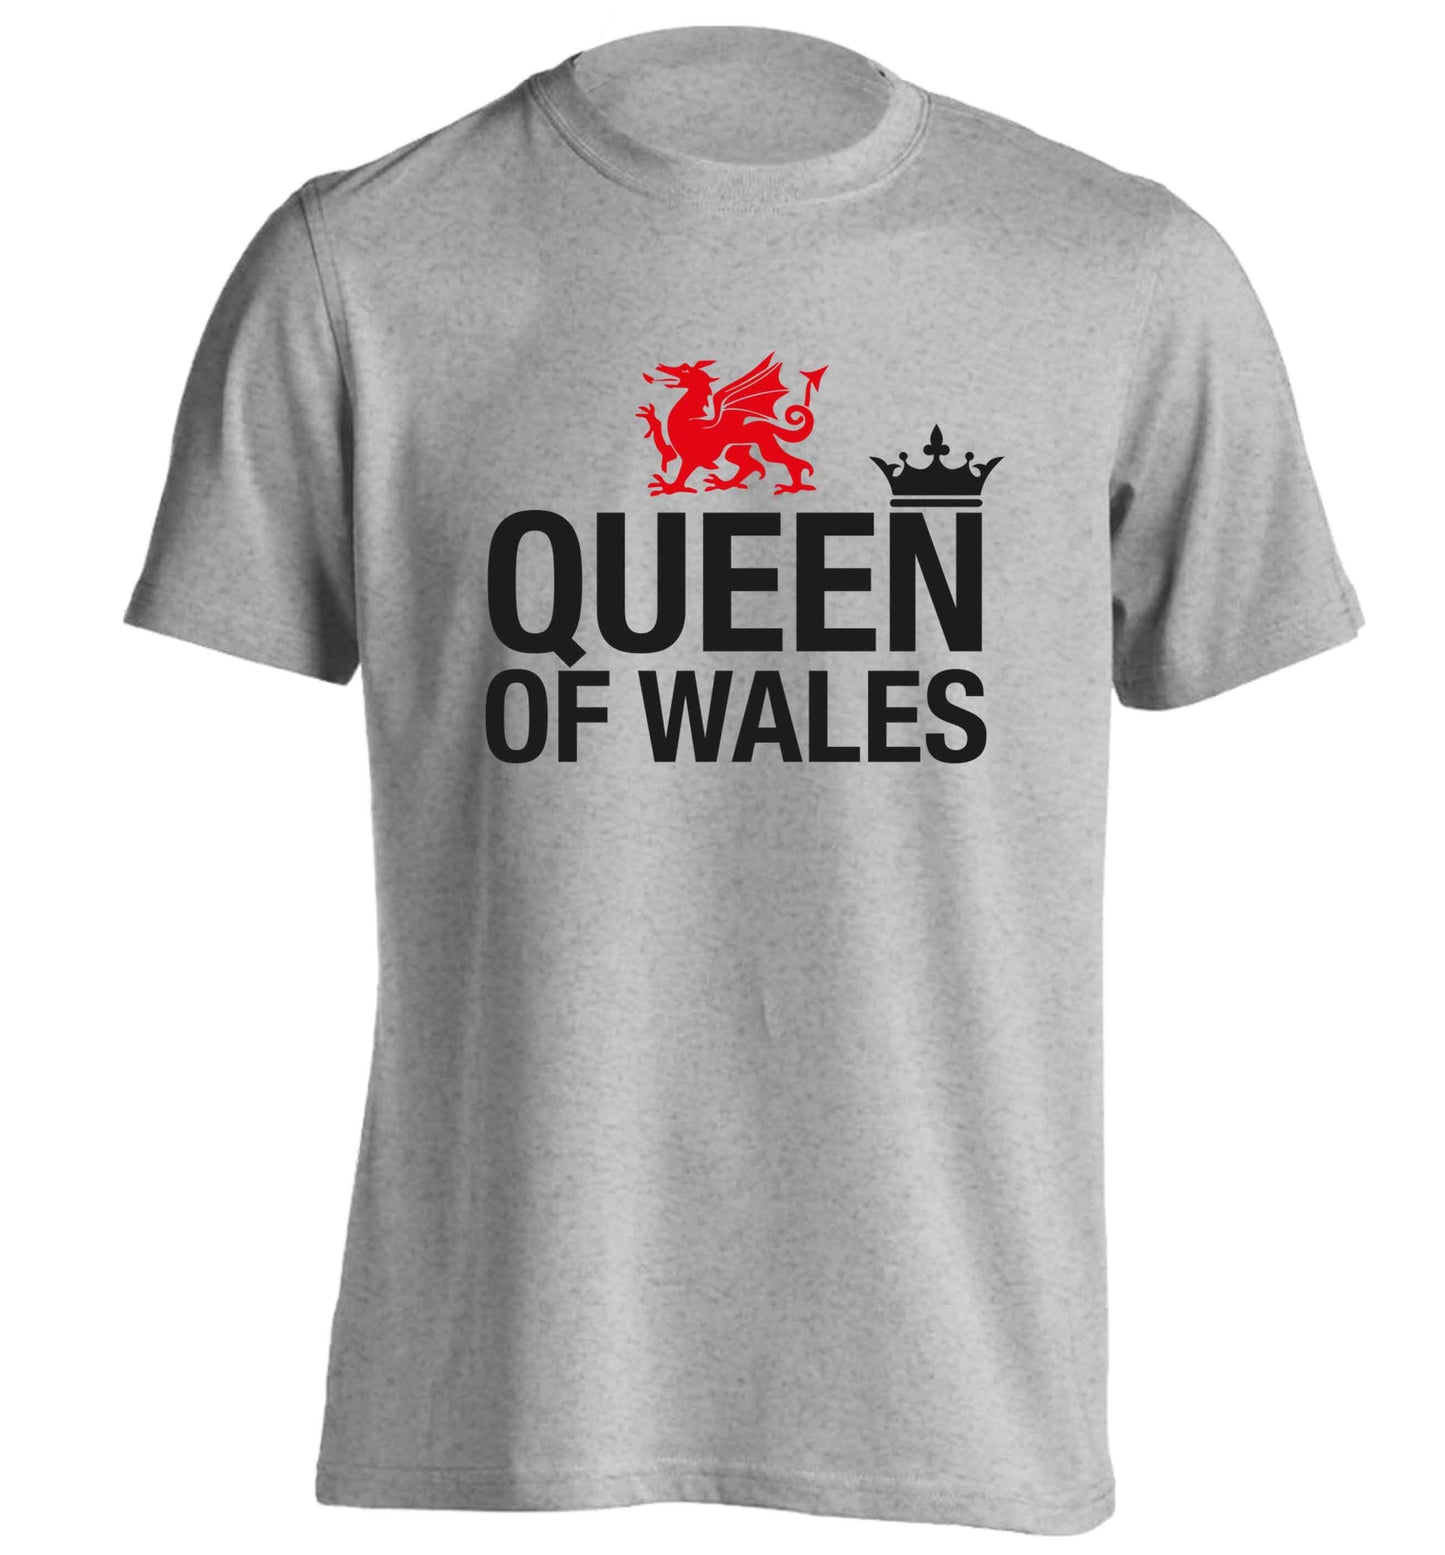 Queen of Wales adults unisex grey Tshirt 2XL